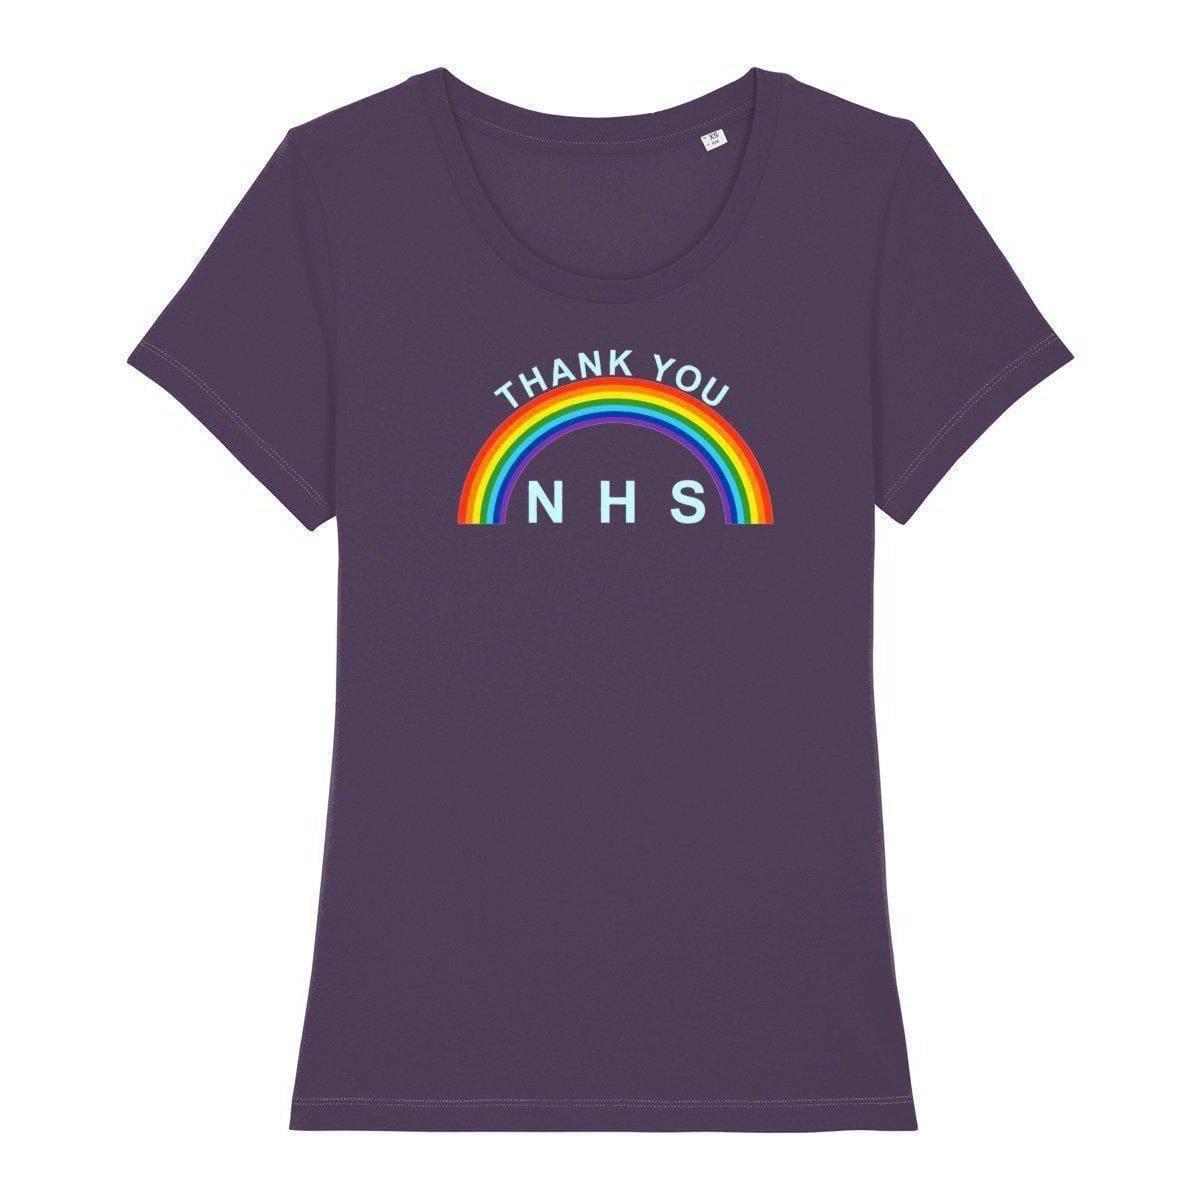  Women's Thank You NHS Rainbow T-shirt